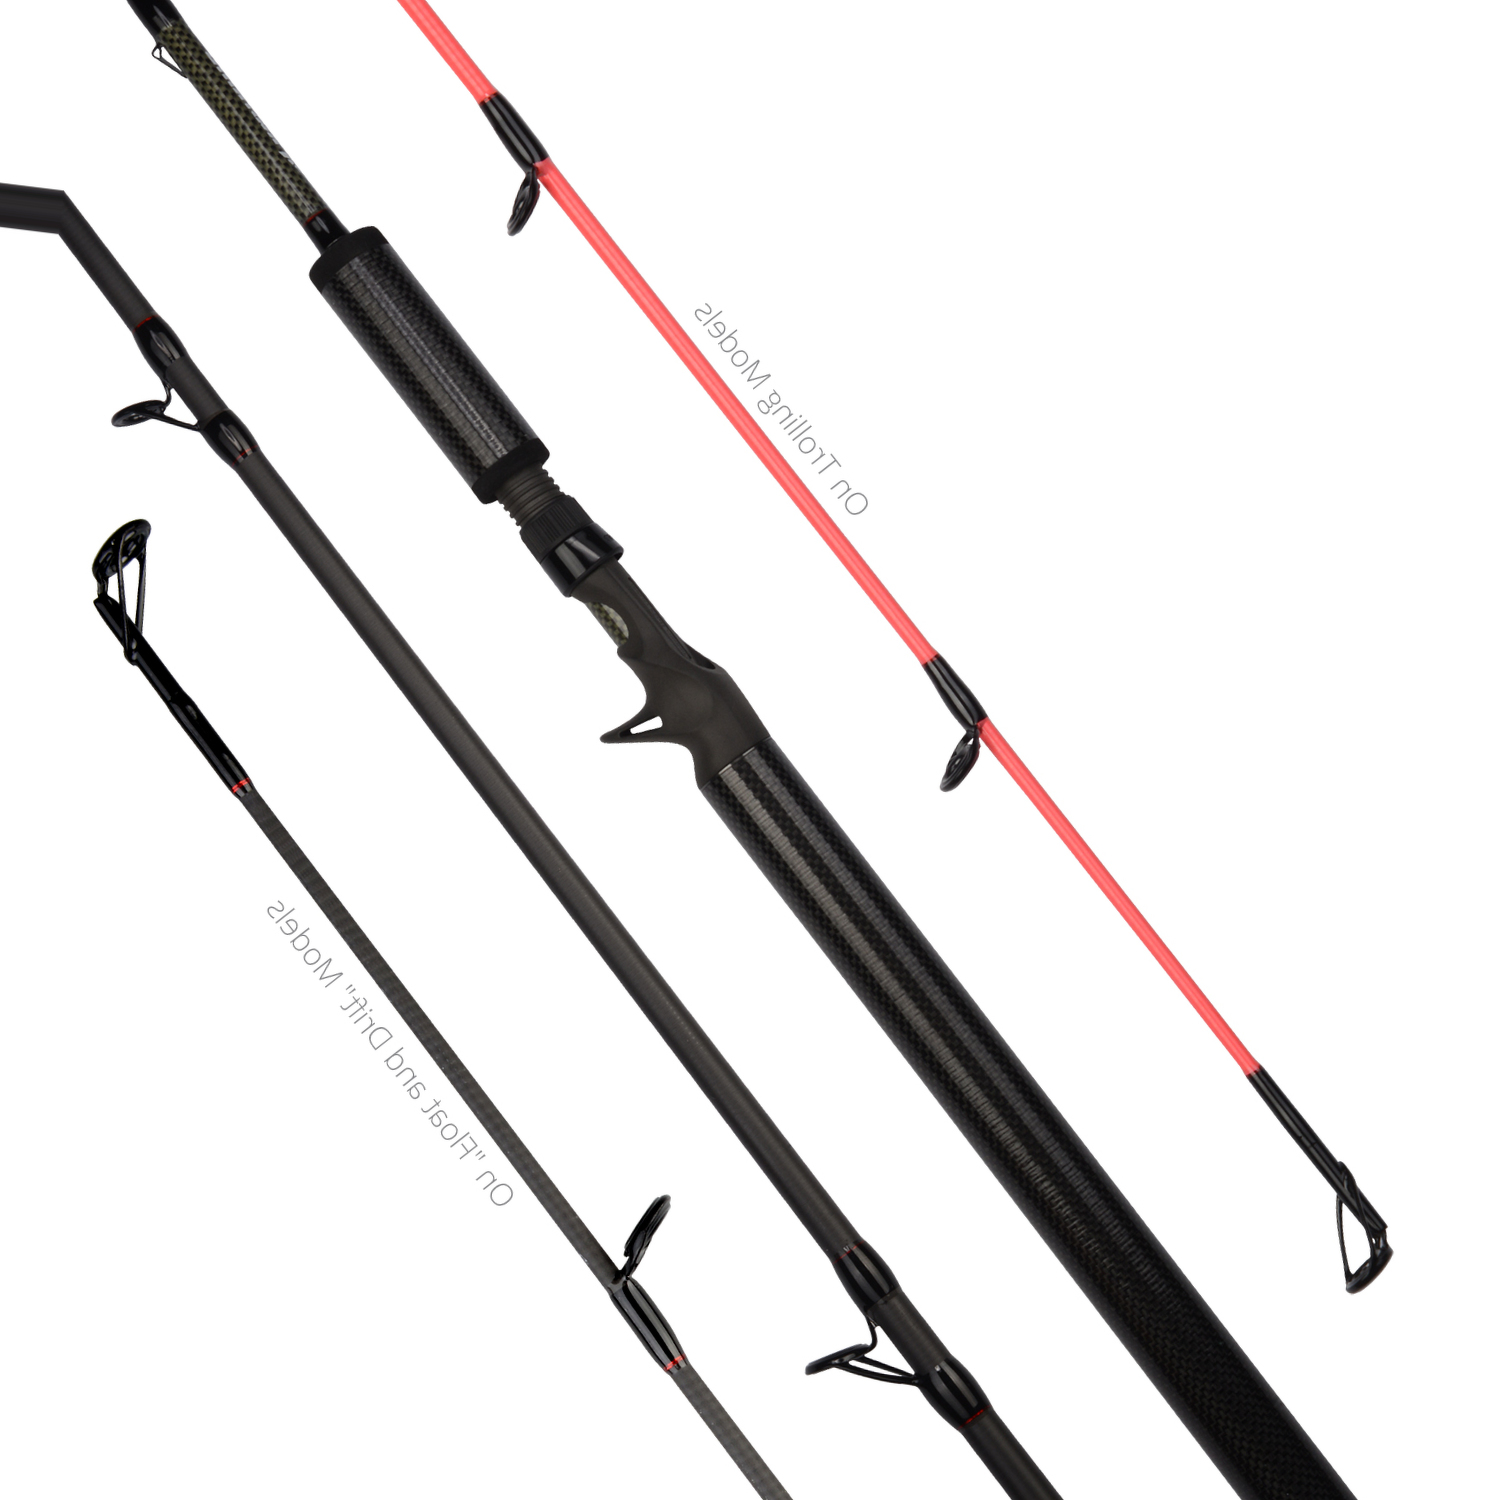 NEW KastKing Krome Salmon/Steelhead Fishing Rods